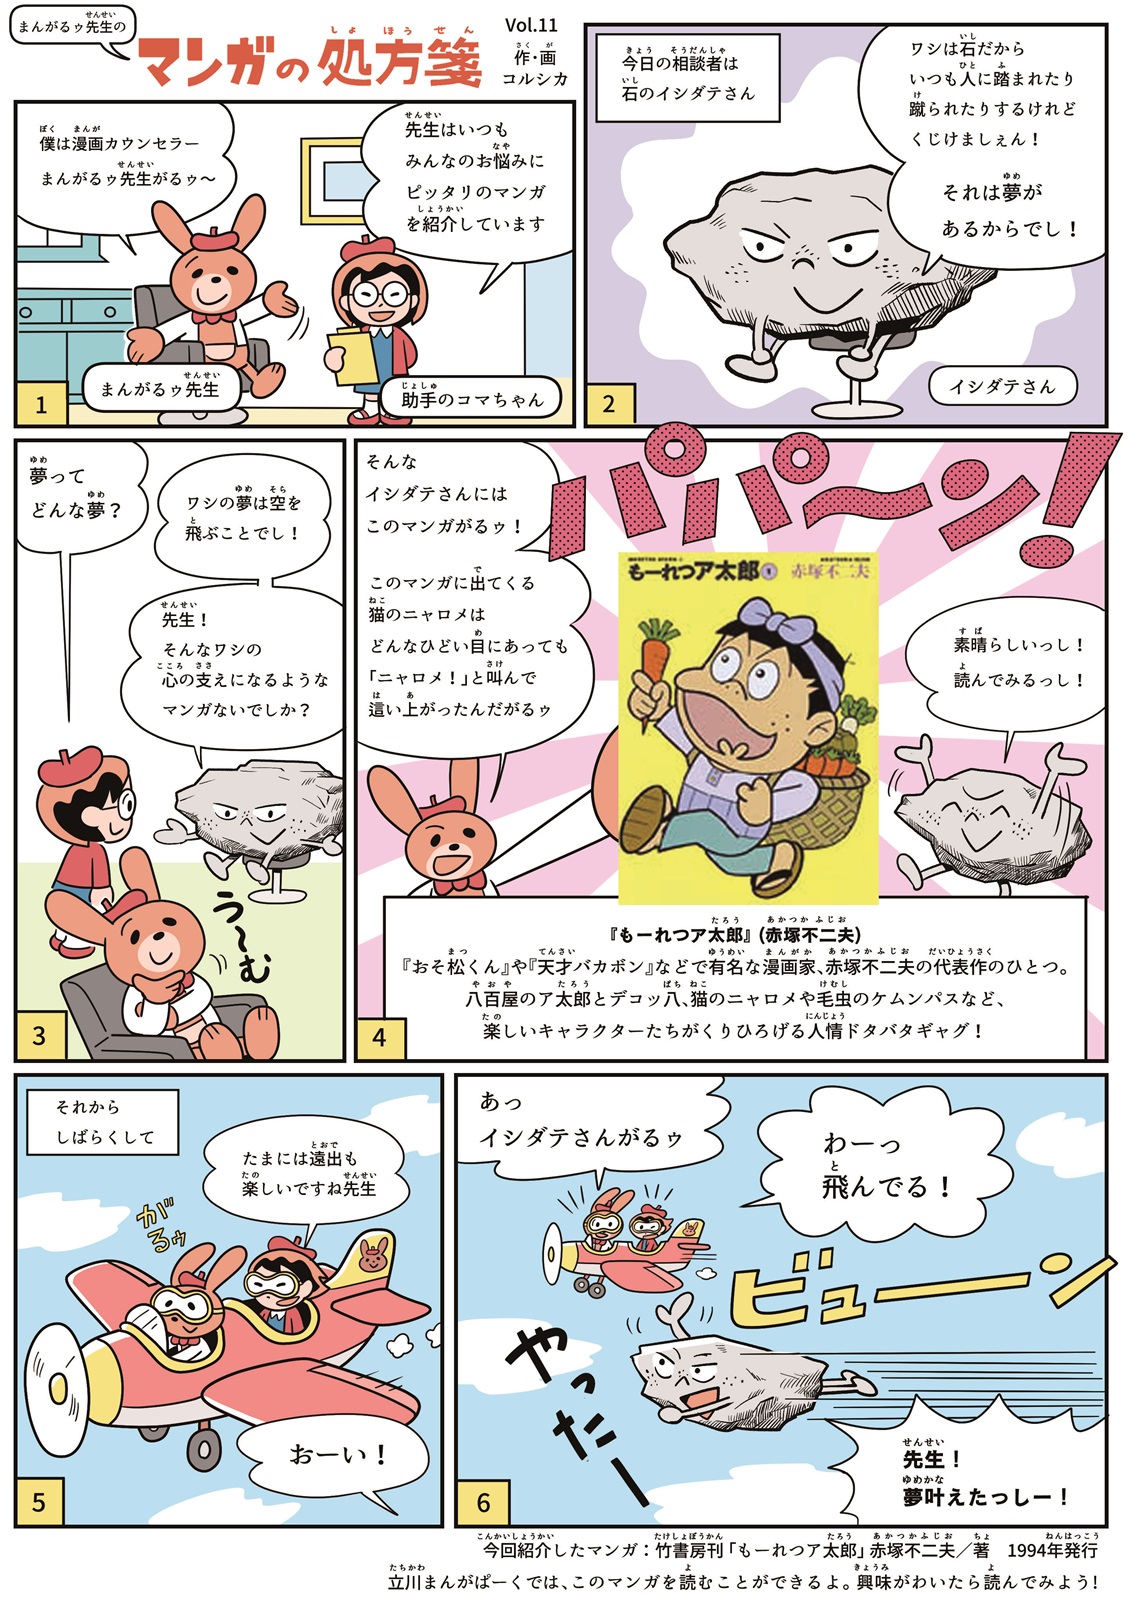 https://mangapark.jp/topics/2019/06/30/images/mangaroosensei_vol11.jpg